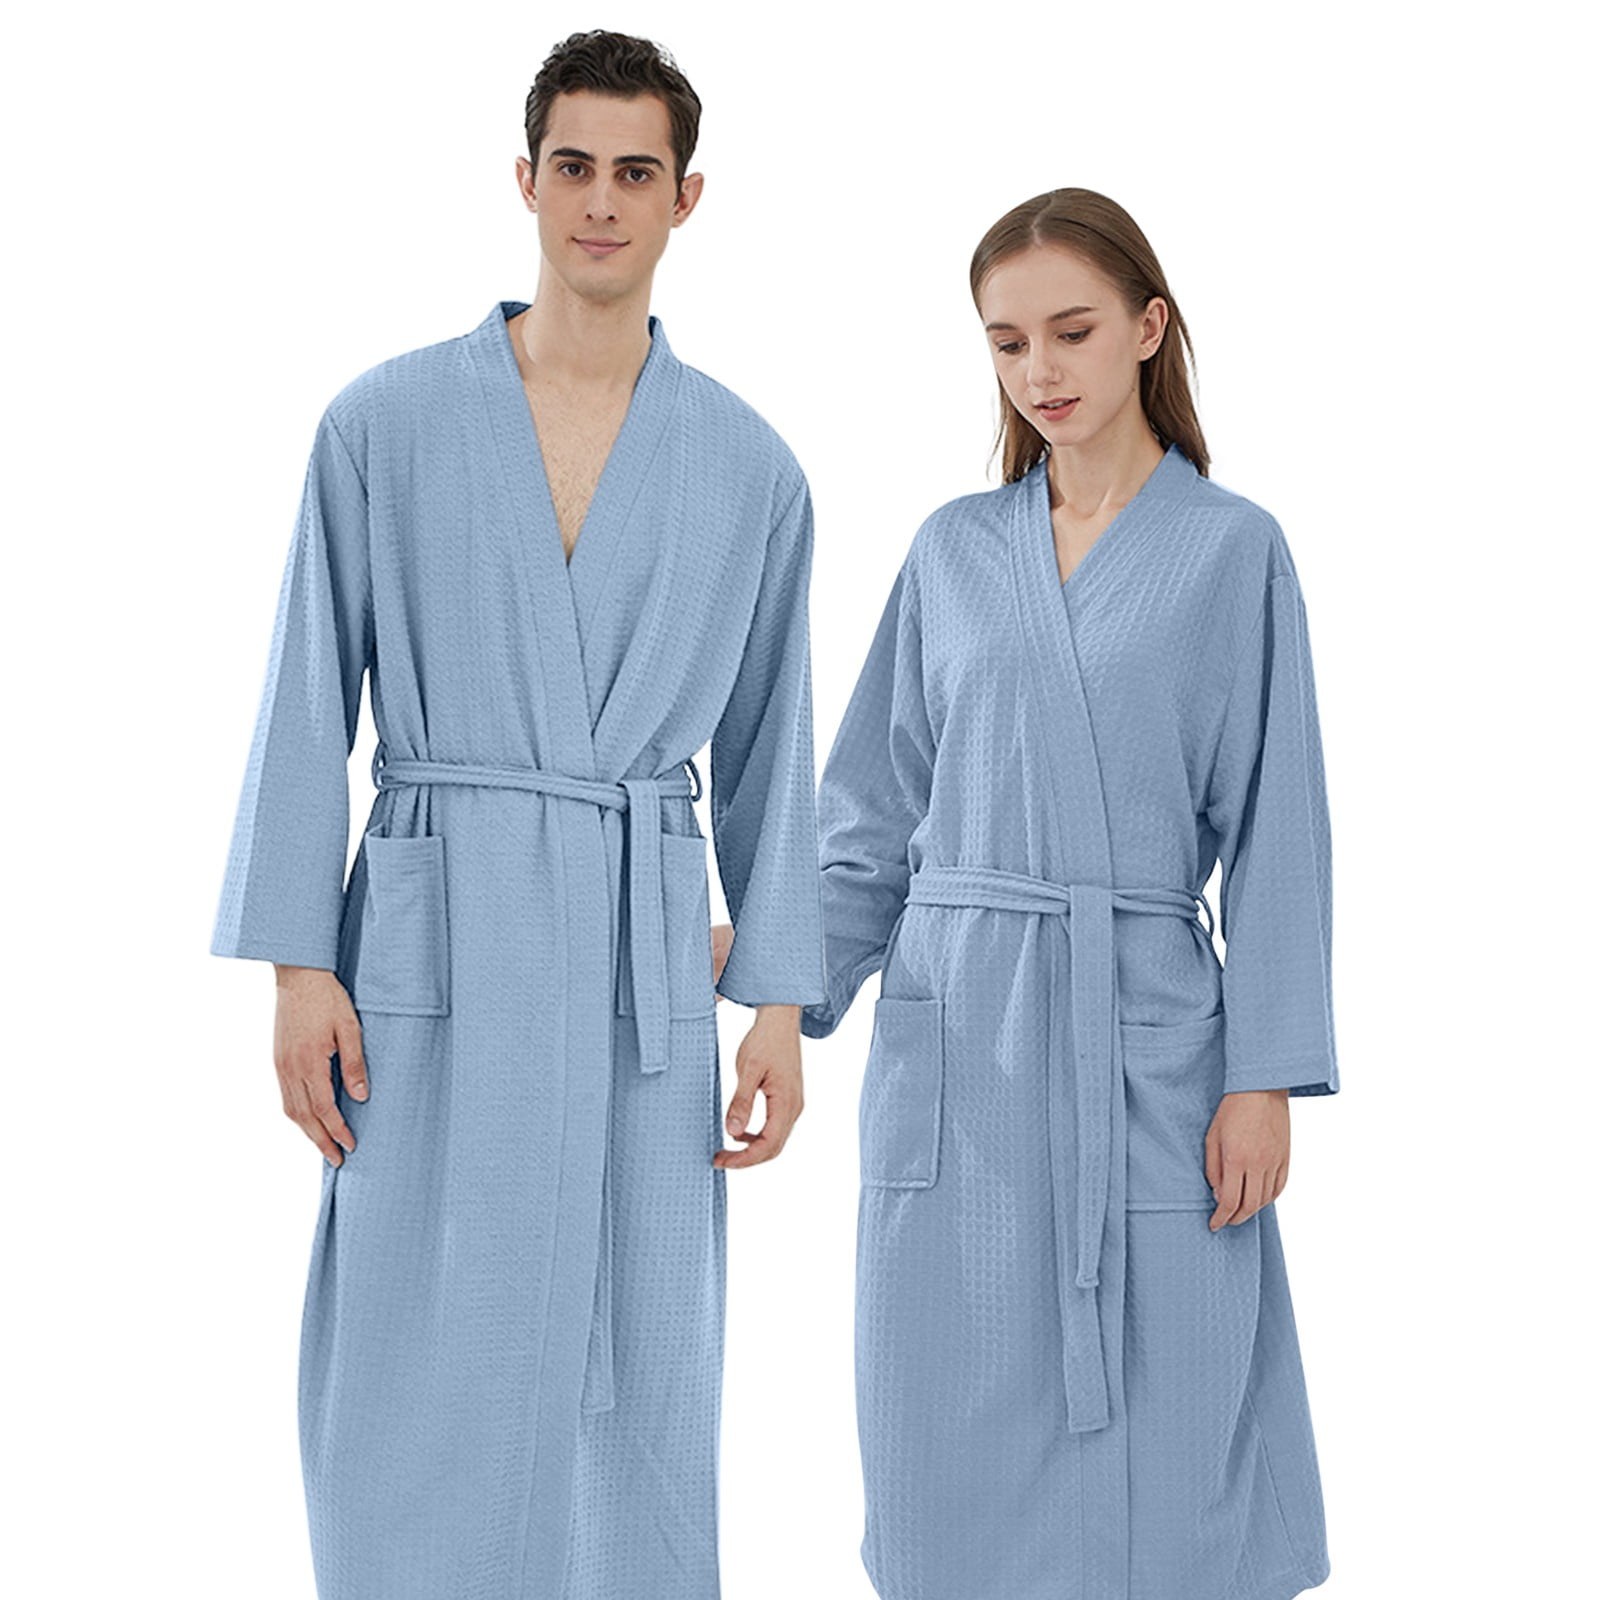 xiuh sleepwear for women ladies men couple cloth robe sleepwear white blue  polyester dressing gown kimono bath robe bathrobe for hotel home women's  sleepwear purple xl - Walmart.com